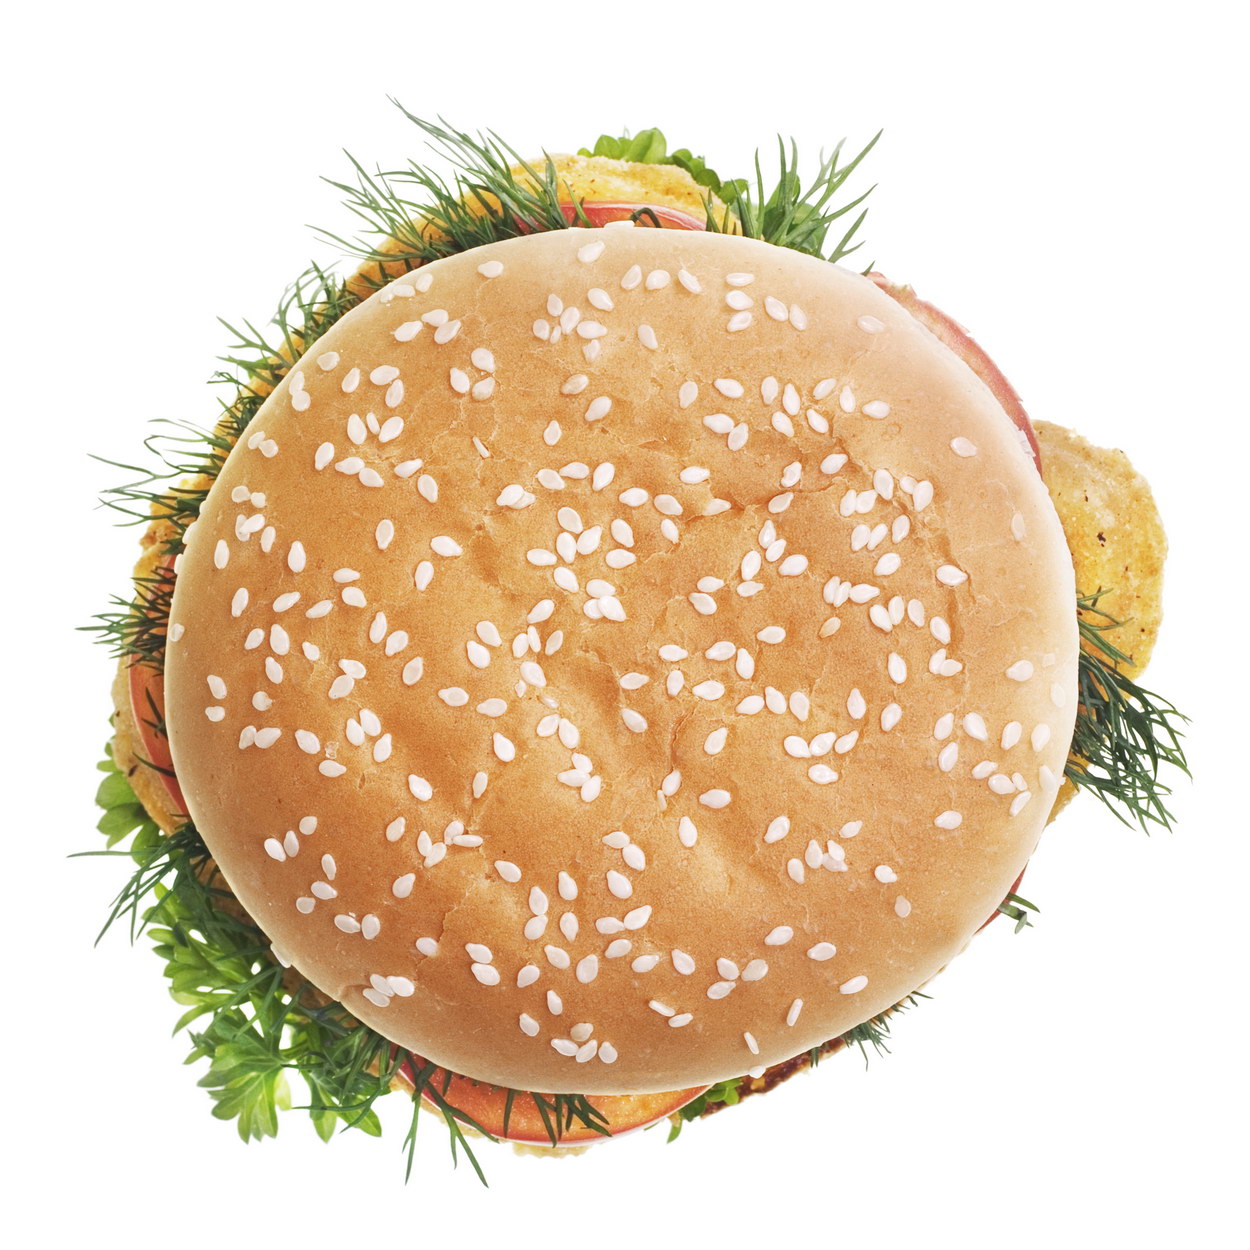 Hamburger photo